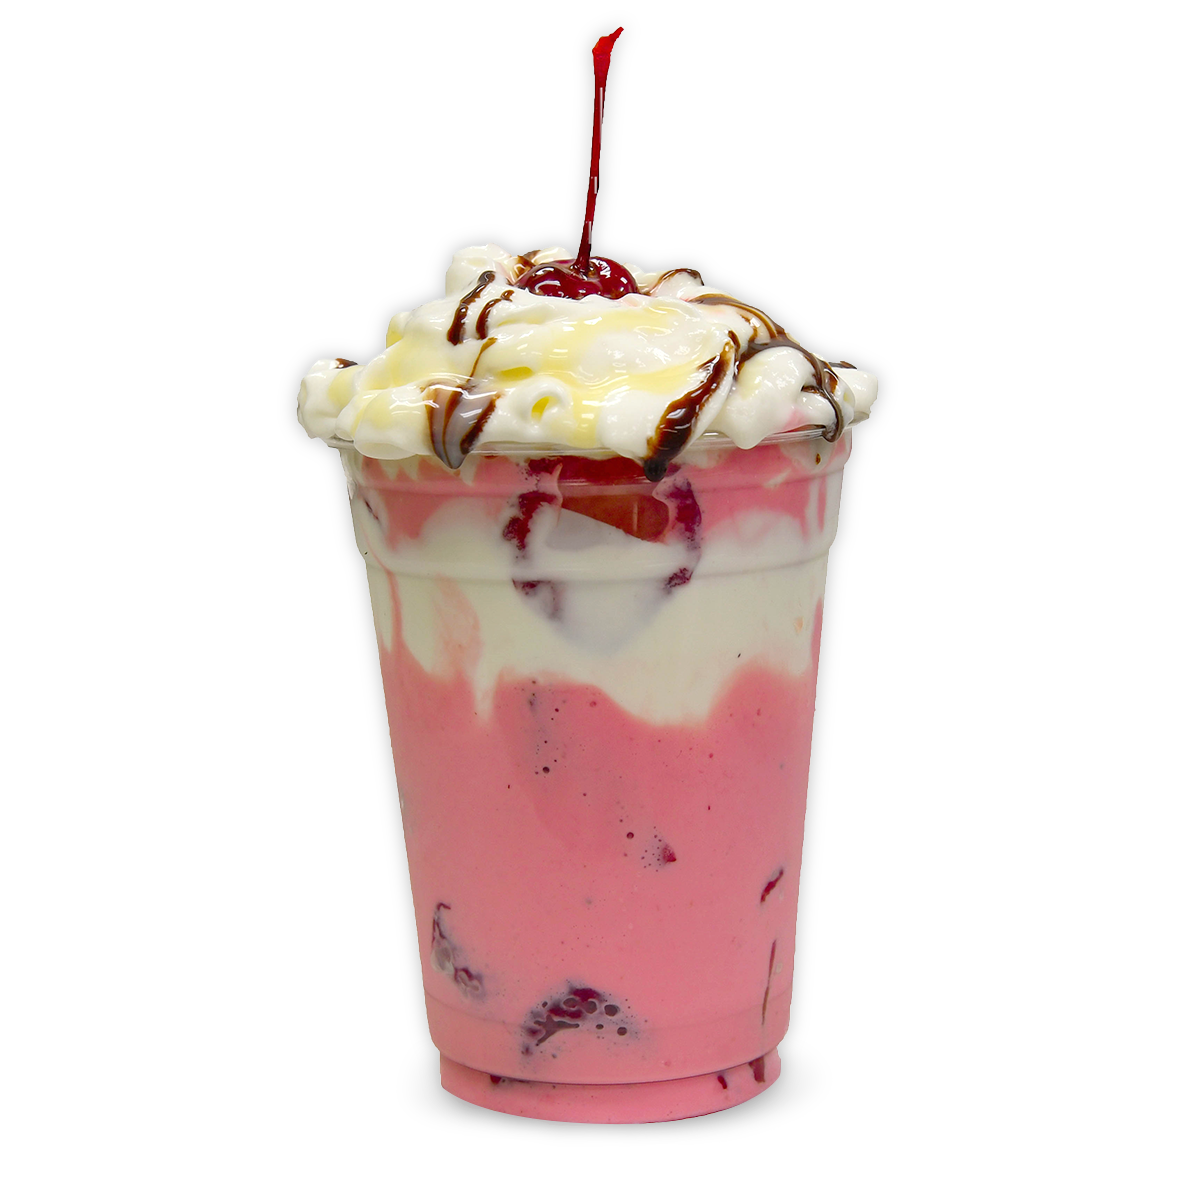 Homemade Ice Cream Menu - Strawberries and Cream Milkshake - Batido de Fresas con Crema | Happy Sun Ice Cream